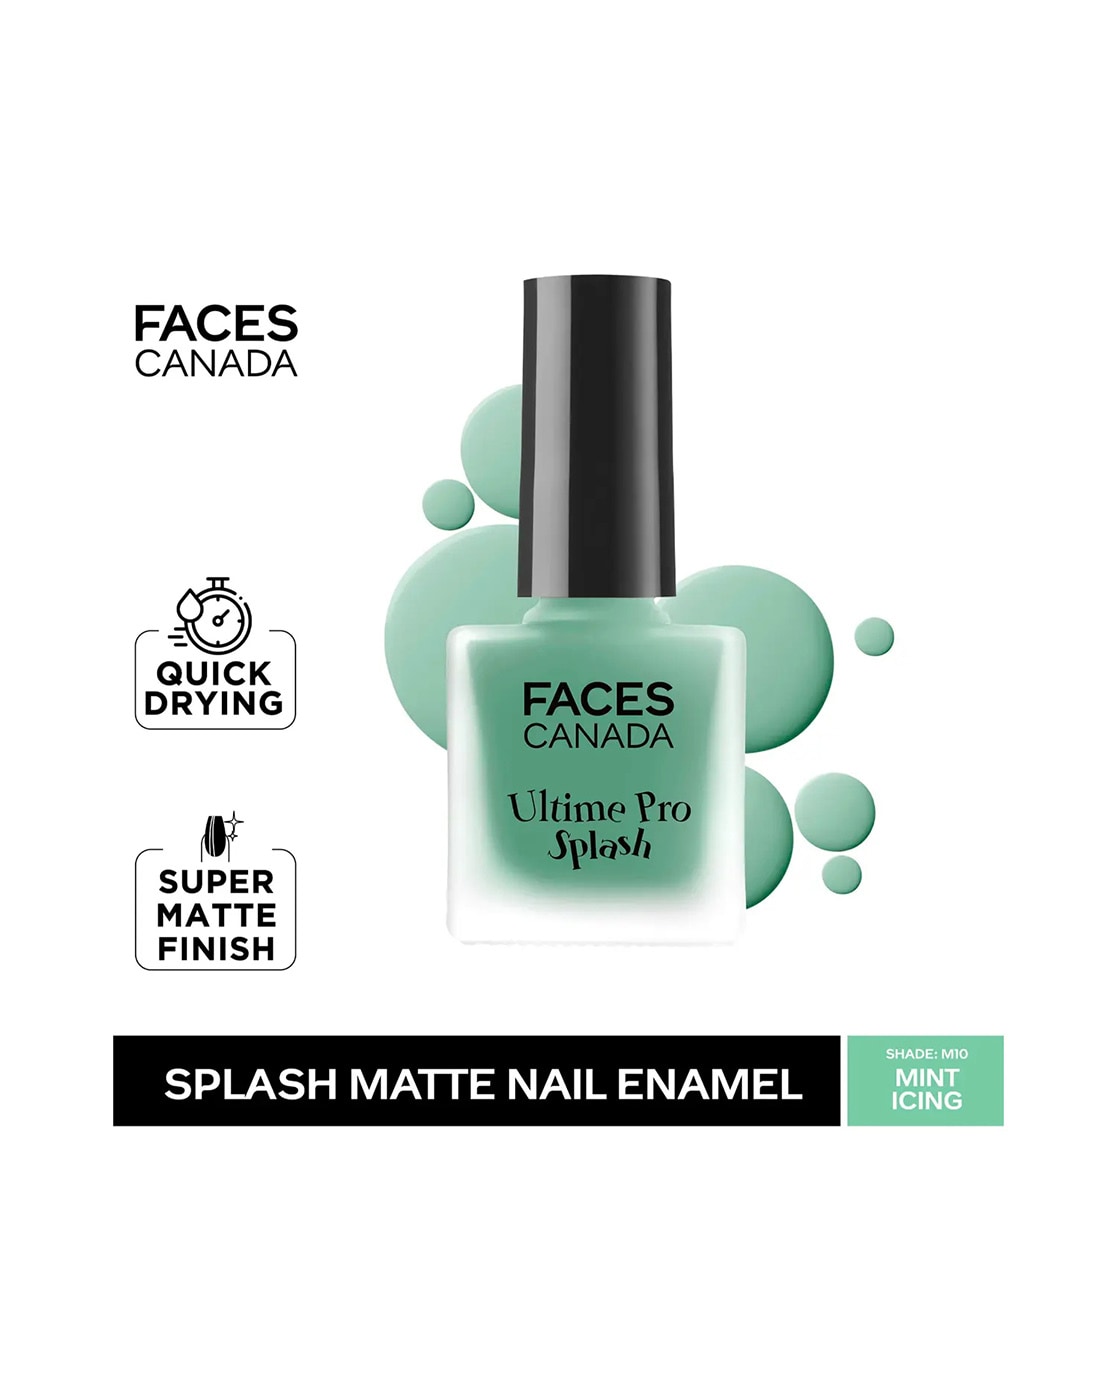 Faces Canada Ultime Pro Splash Matte Nail Enamel 8ml | eBay